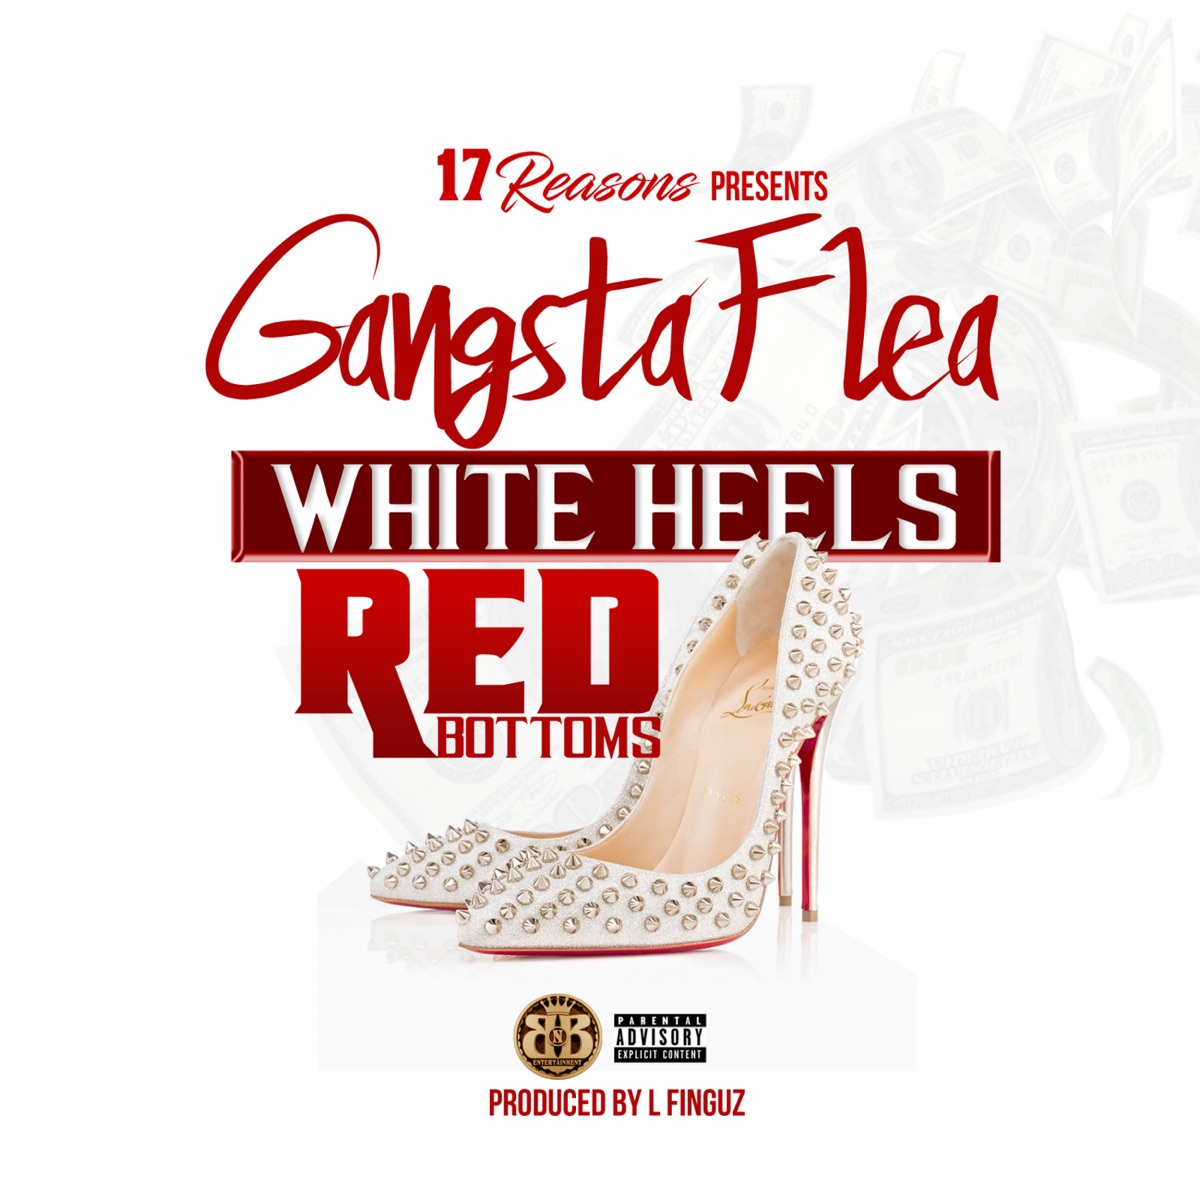 White Heels Red Bottoms - Single - Album by Gangsta Flea - Apple Music